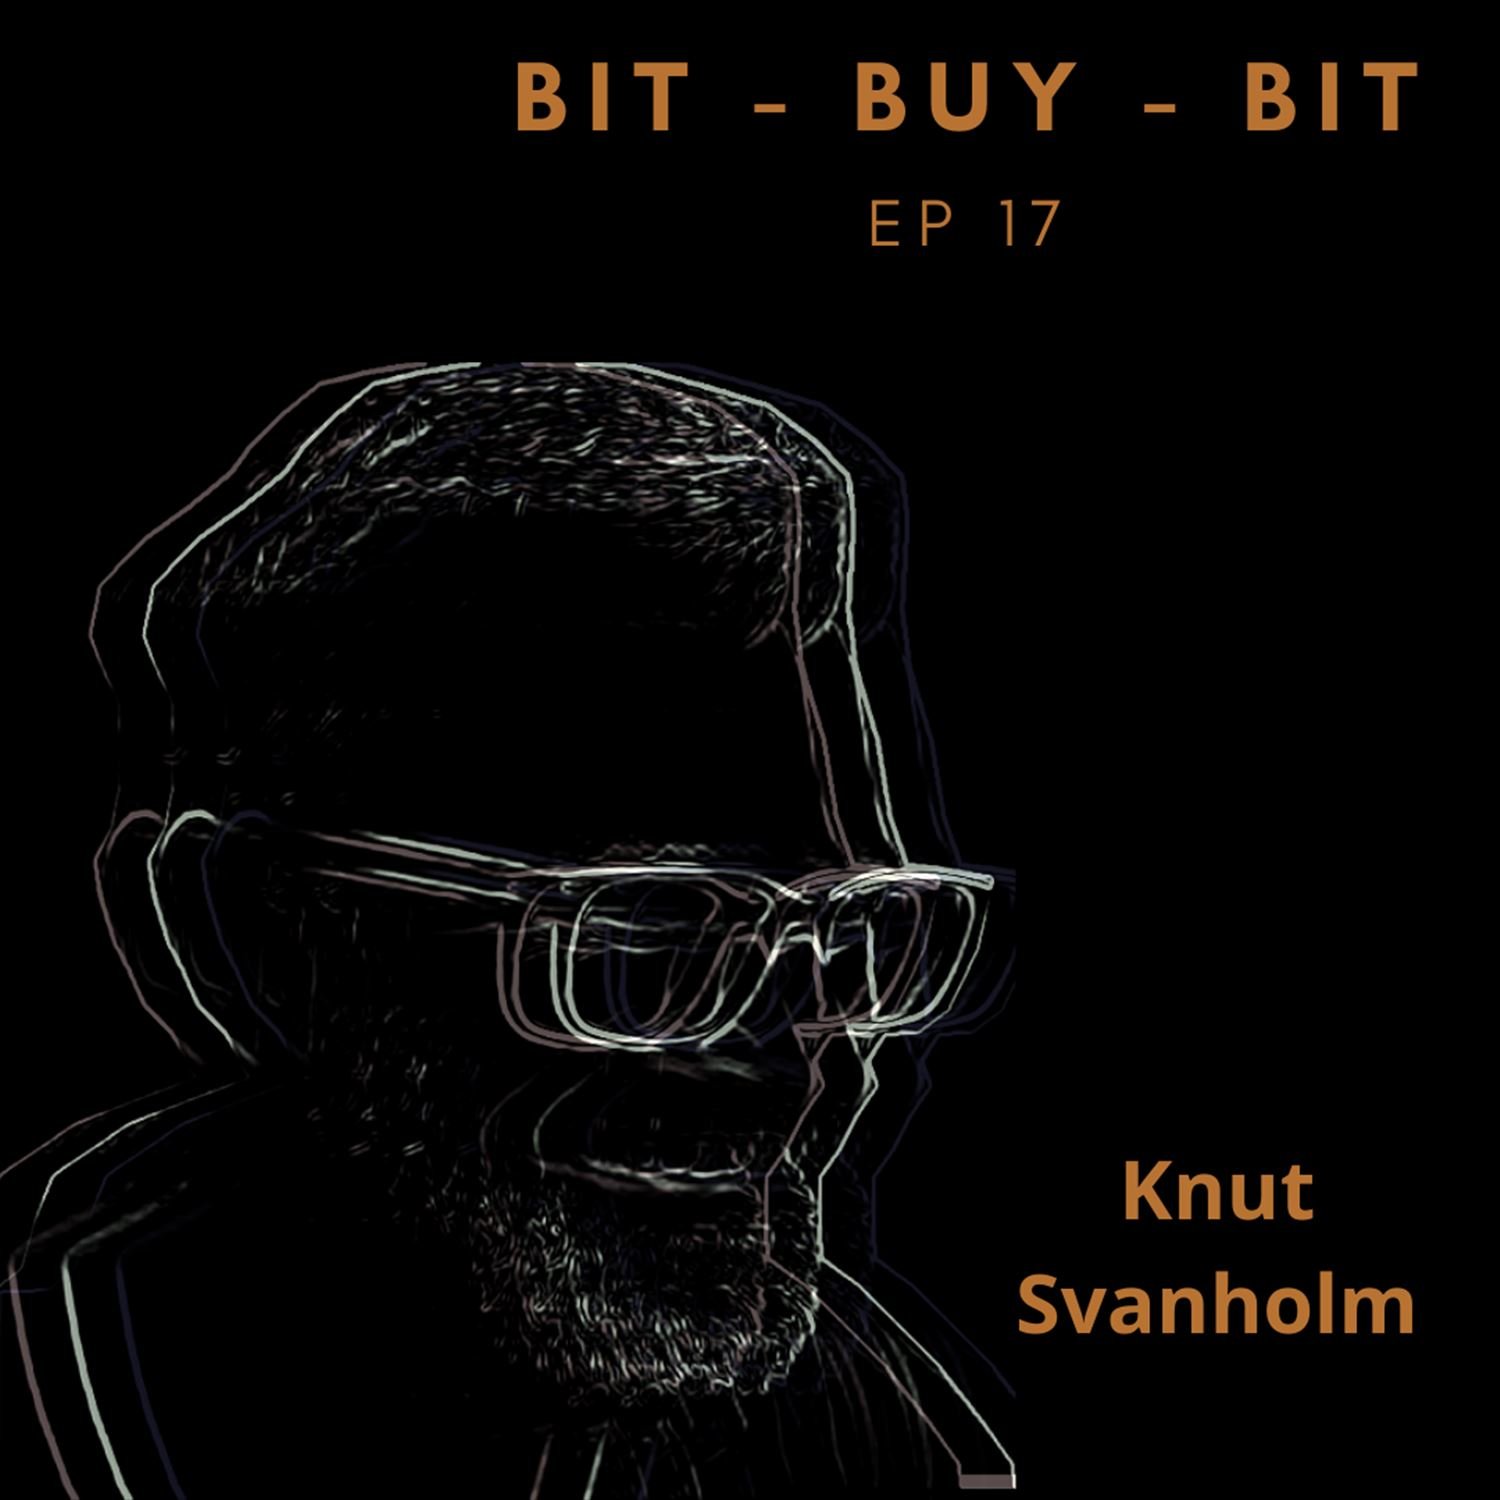 EP17 Bitcoin podcast with Knut Svanholm.